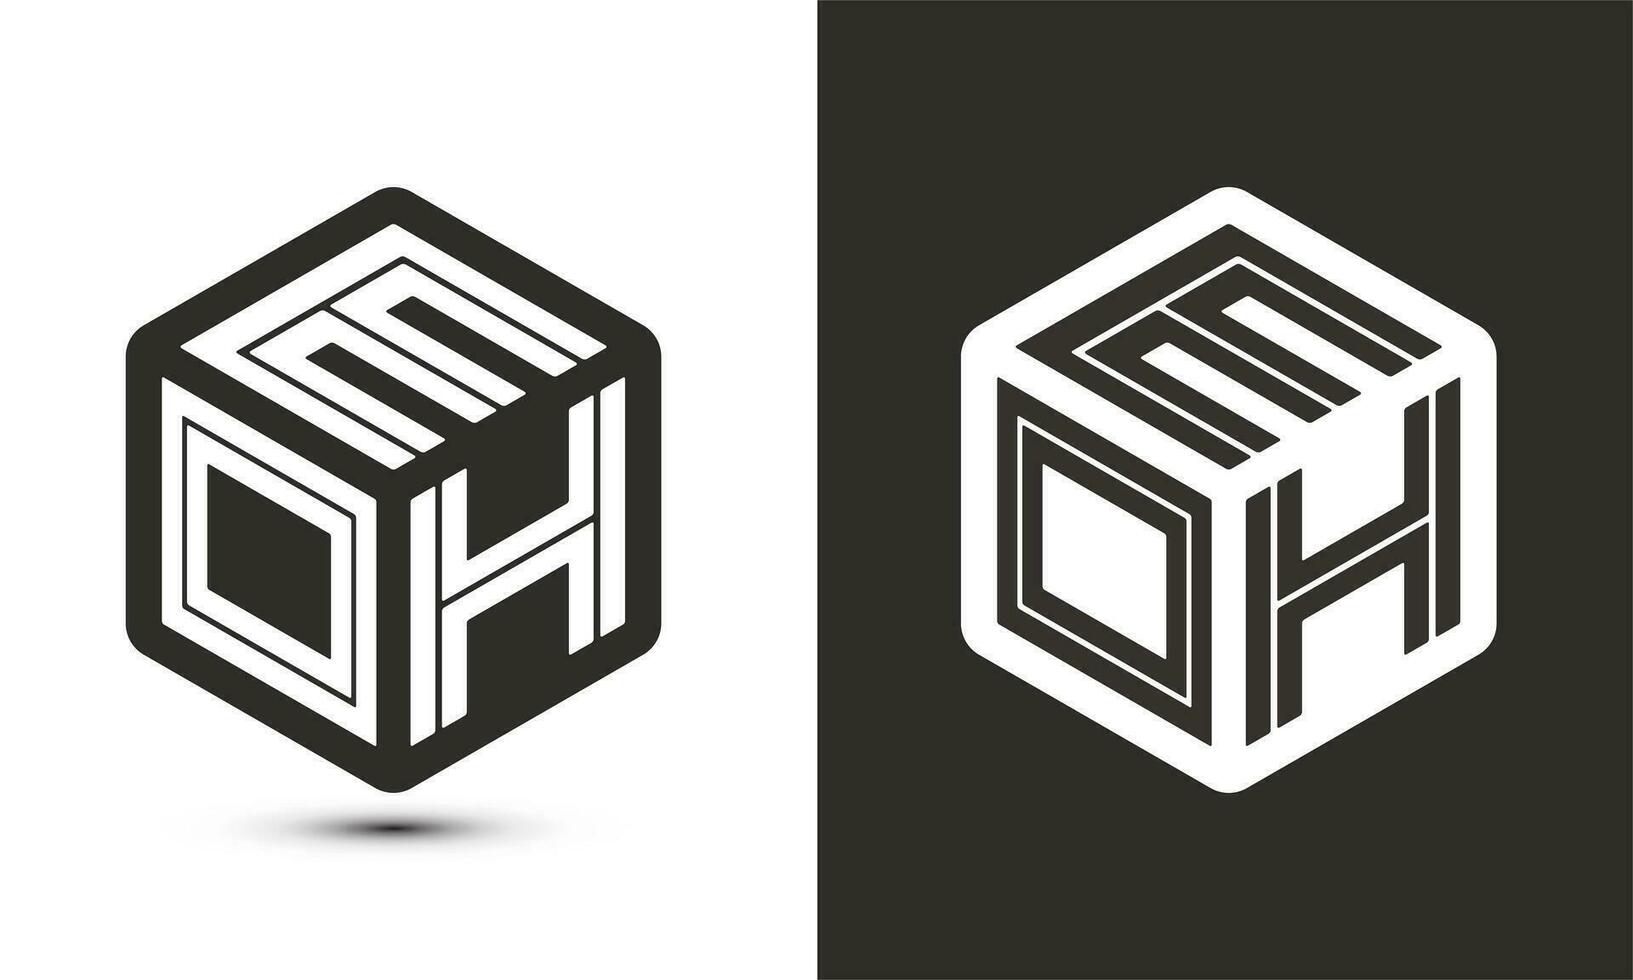 eoh letra logo diseño con ilustrador cubo logo, vector logo moderno alfabeto fuente superposición estilo.